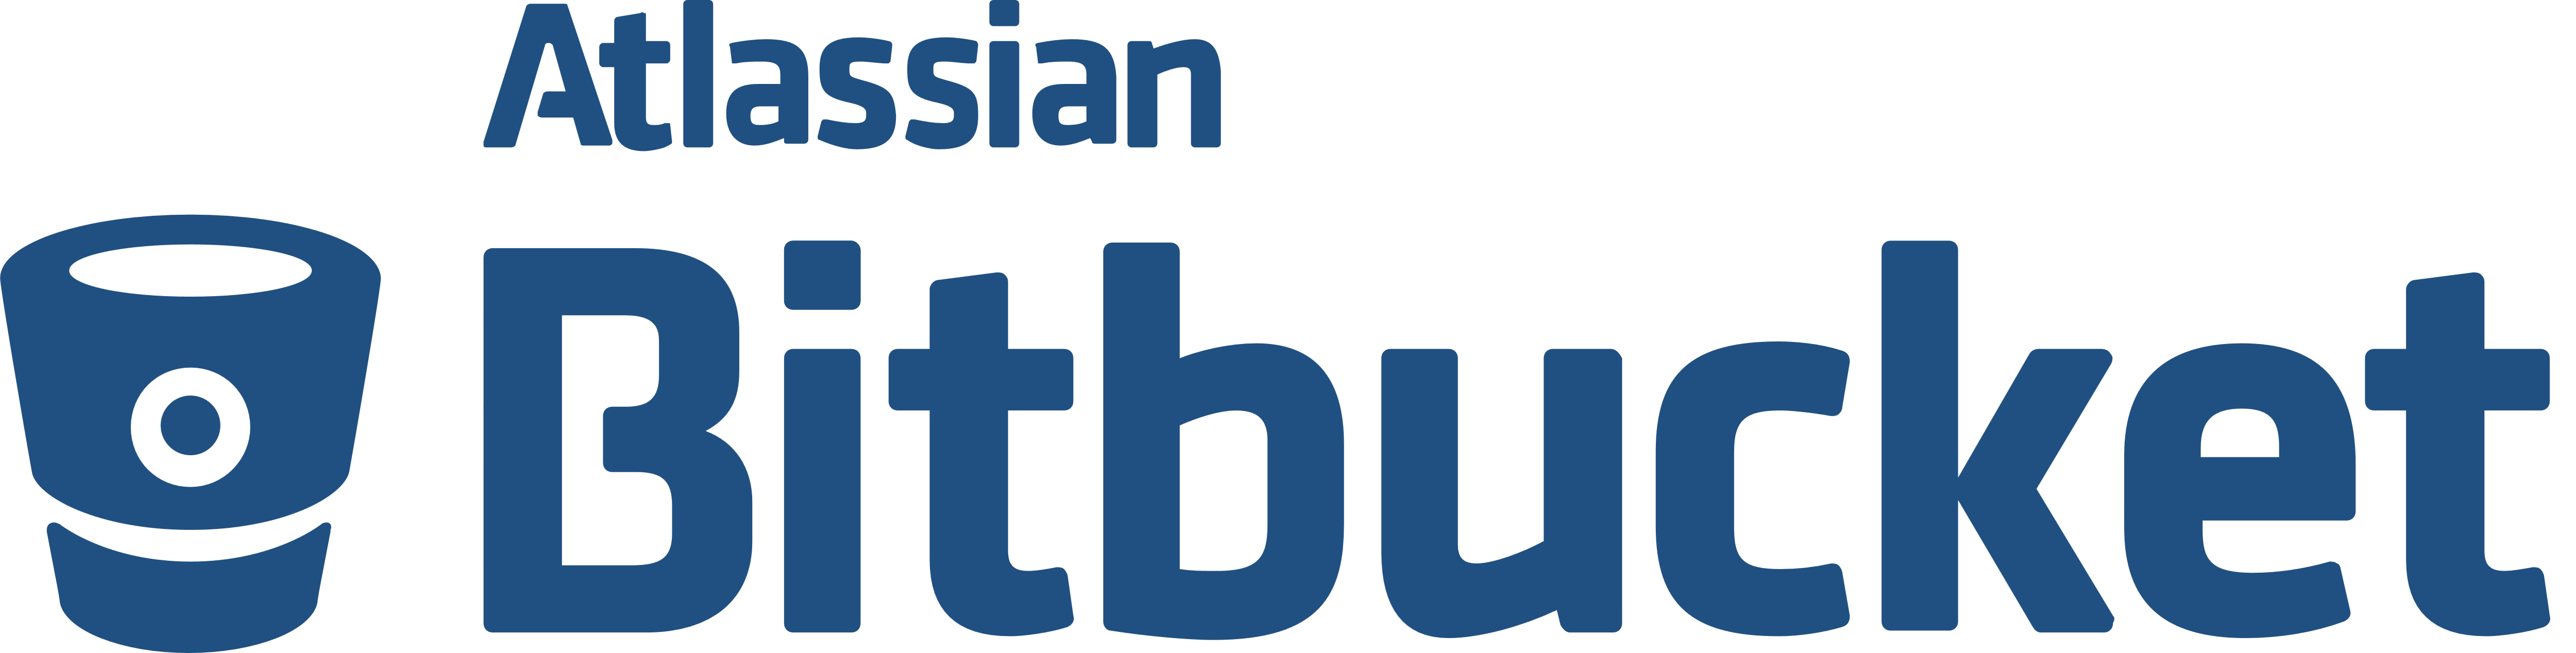 Bitbucket Logo - Bitbucket – Logos Download